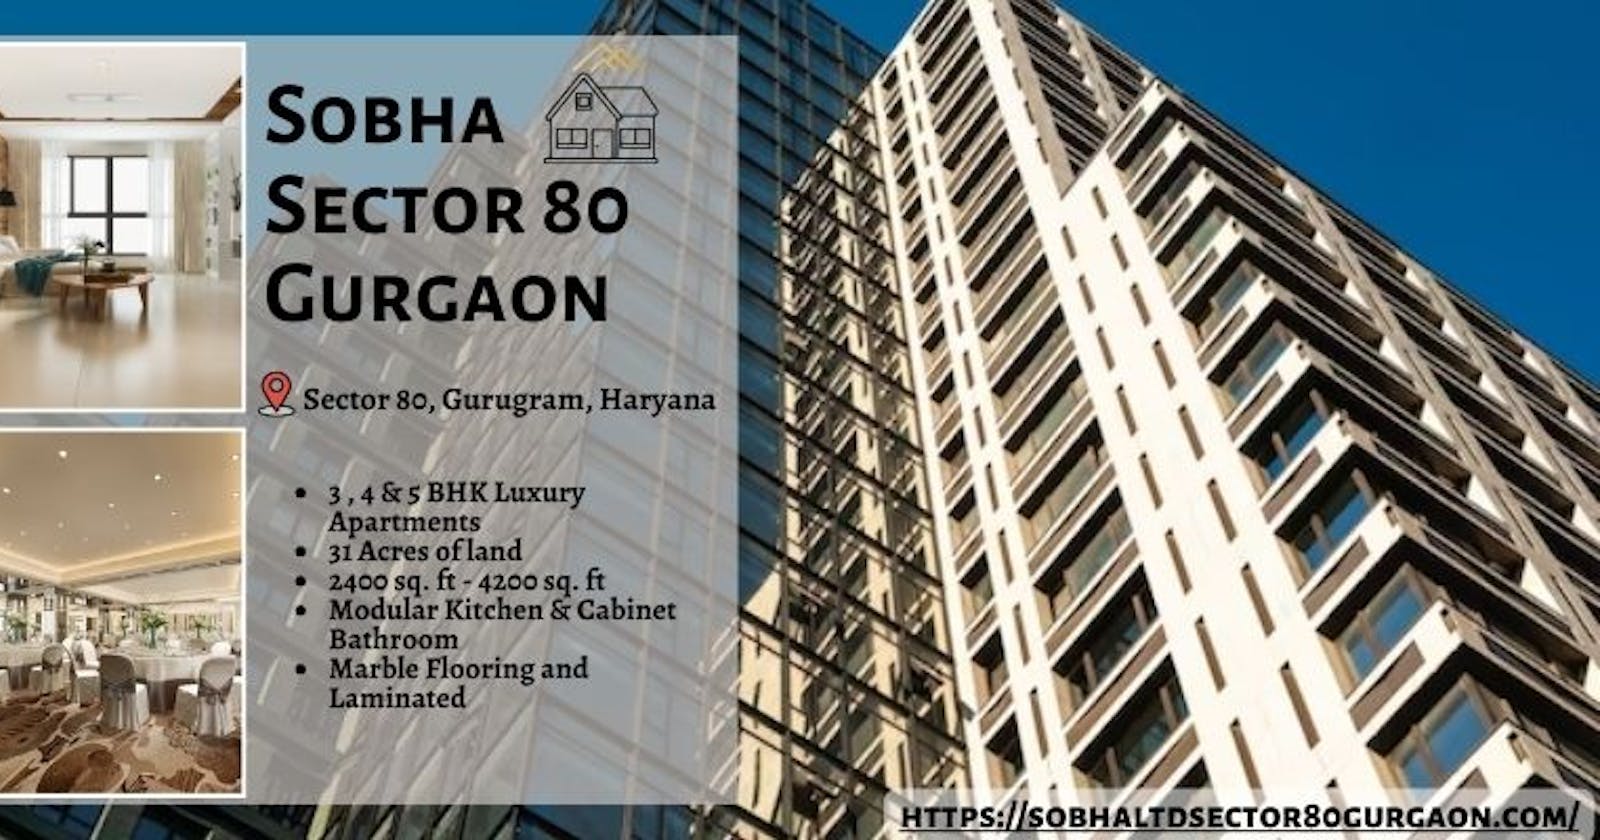 Sobha Sector 80 Gurgaon: Where Luxury Meets Convenience